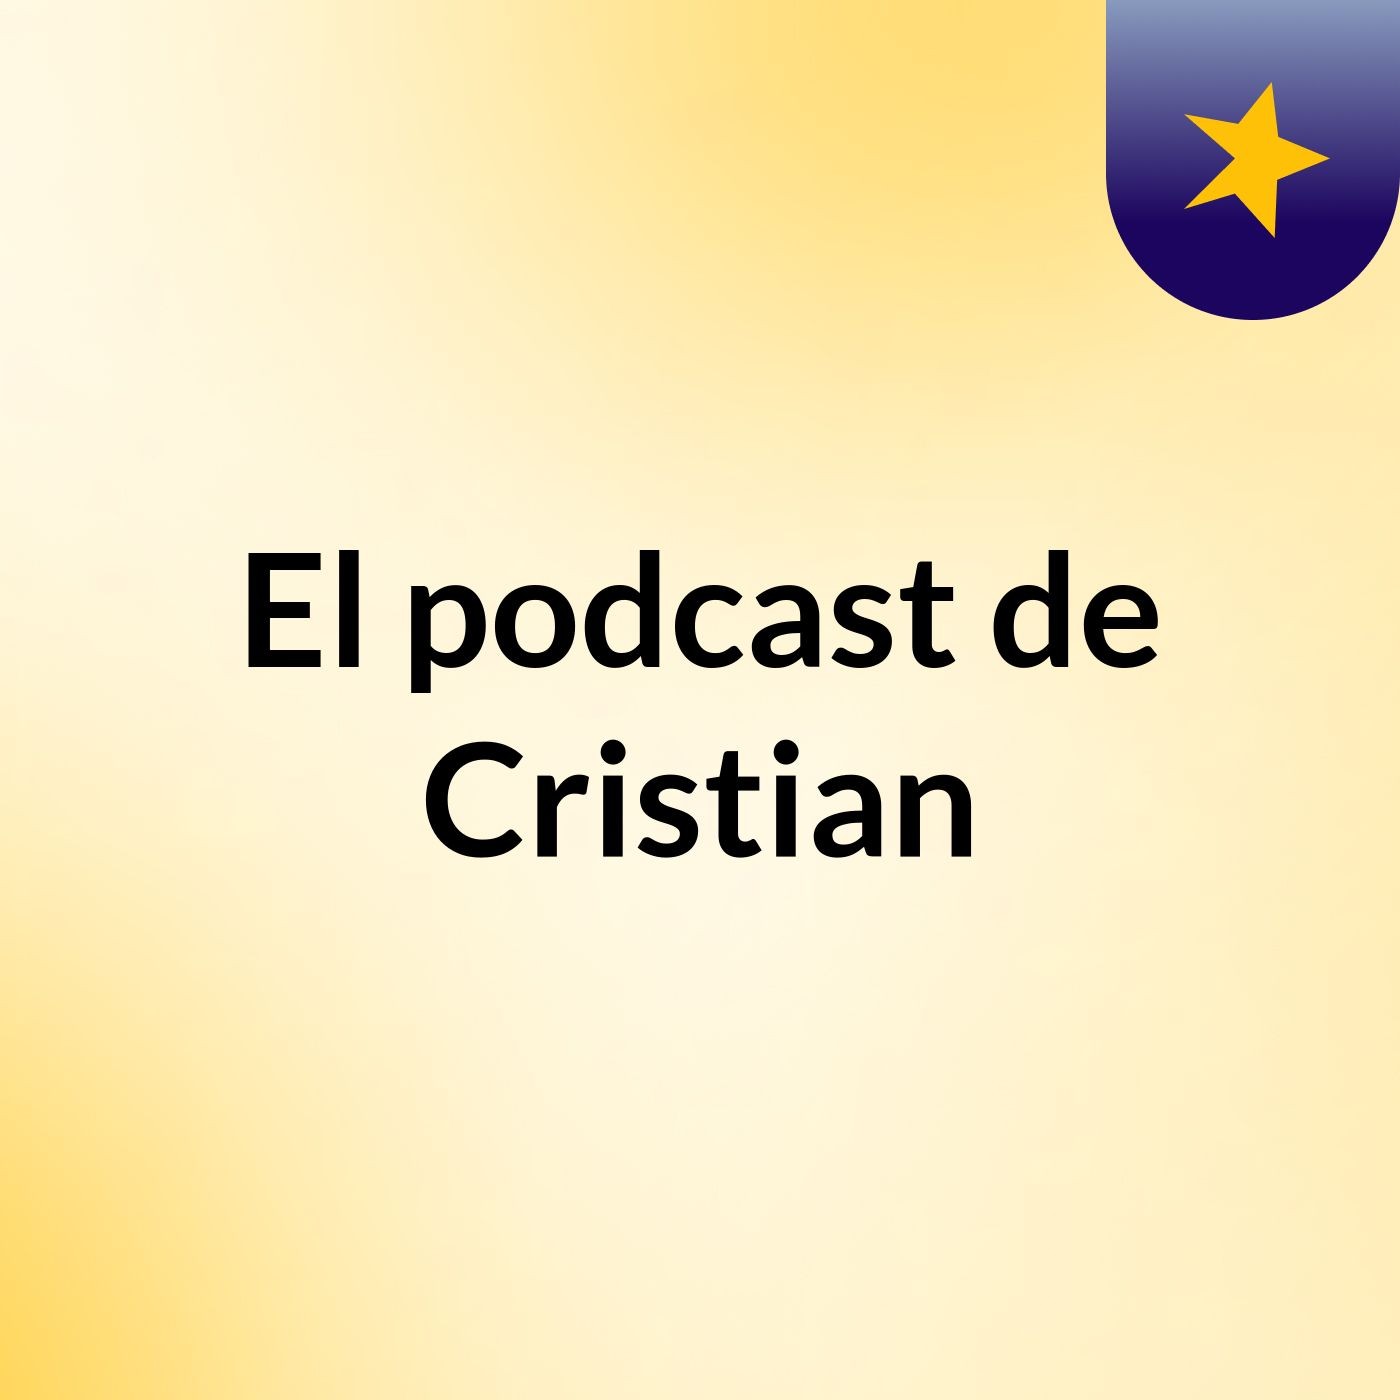 Episodio 3 - El podcast de Cristian